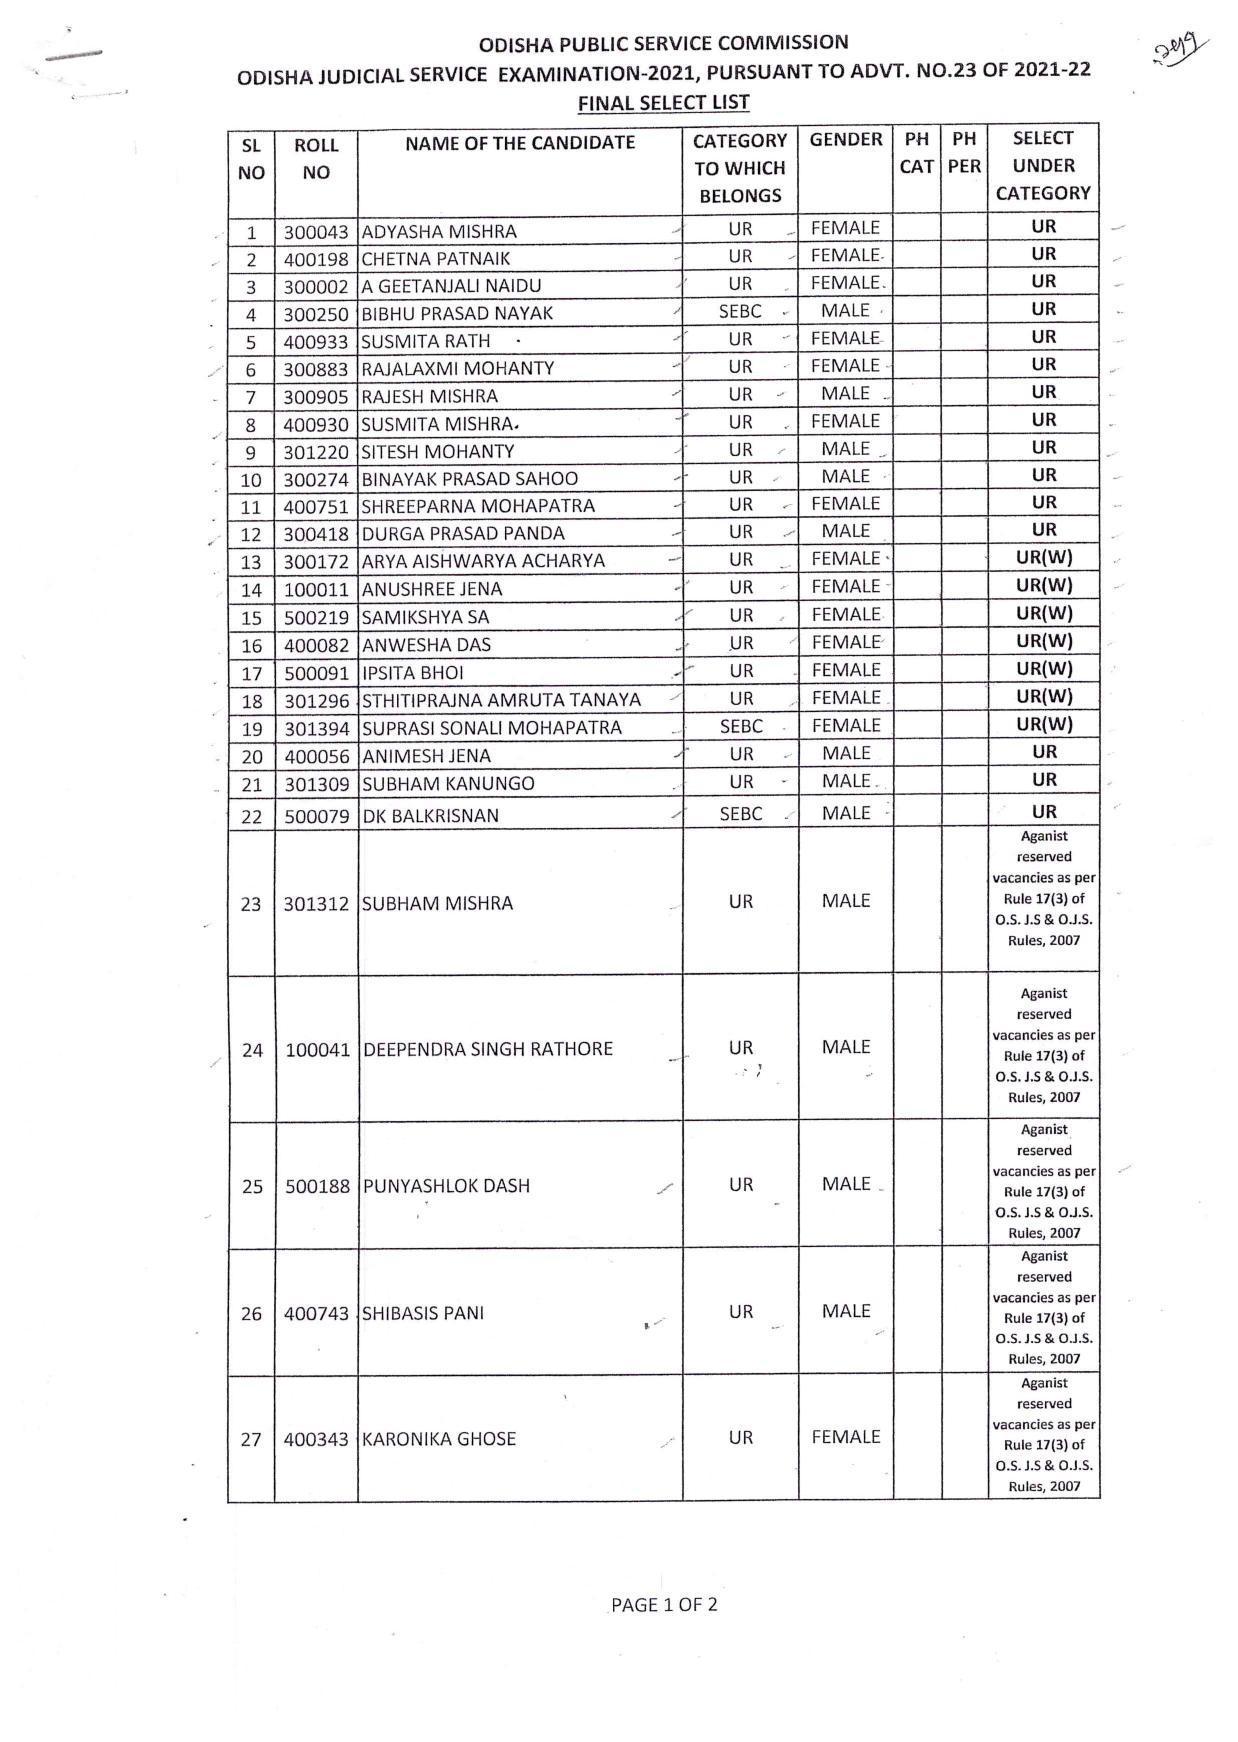 OPSC Odisha Judicial Service Civil Judge Result 2022 - Final Result Released - Page 1